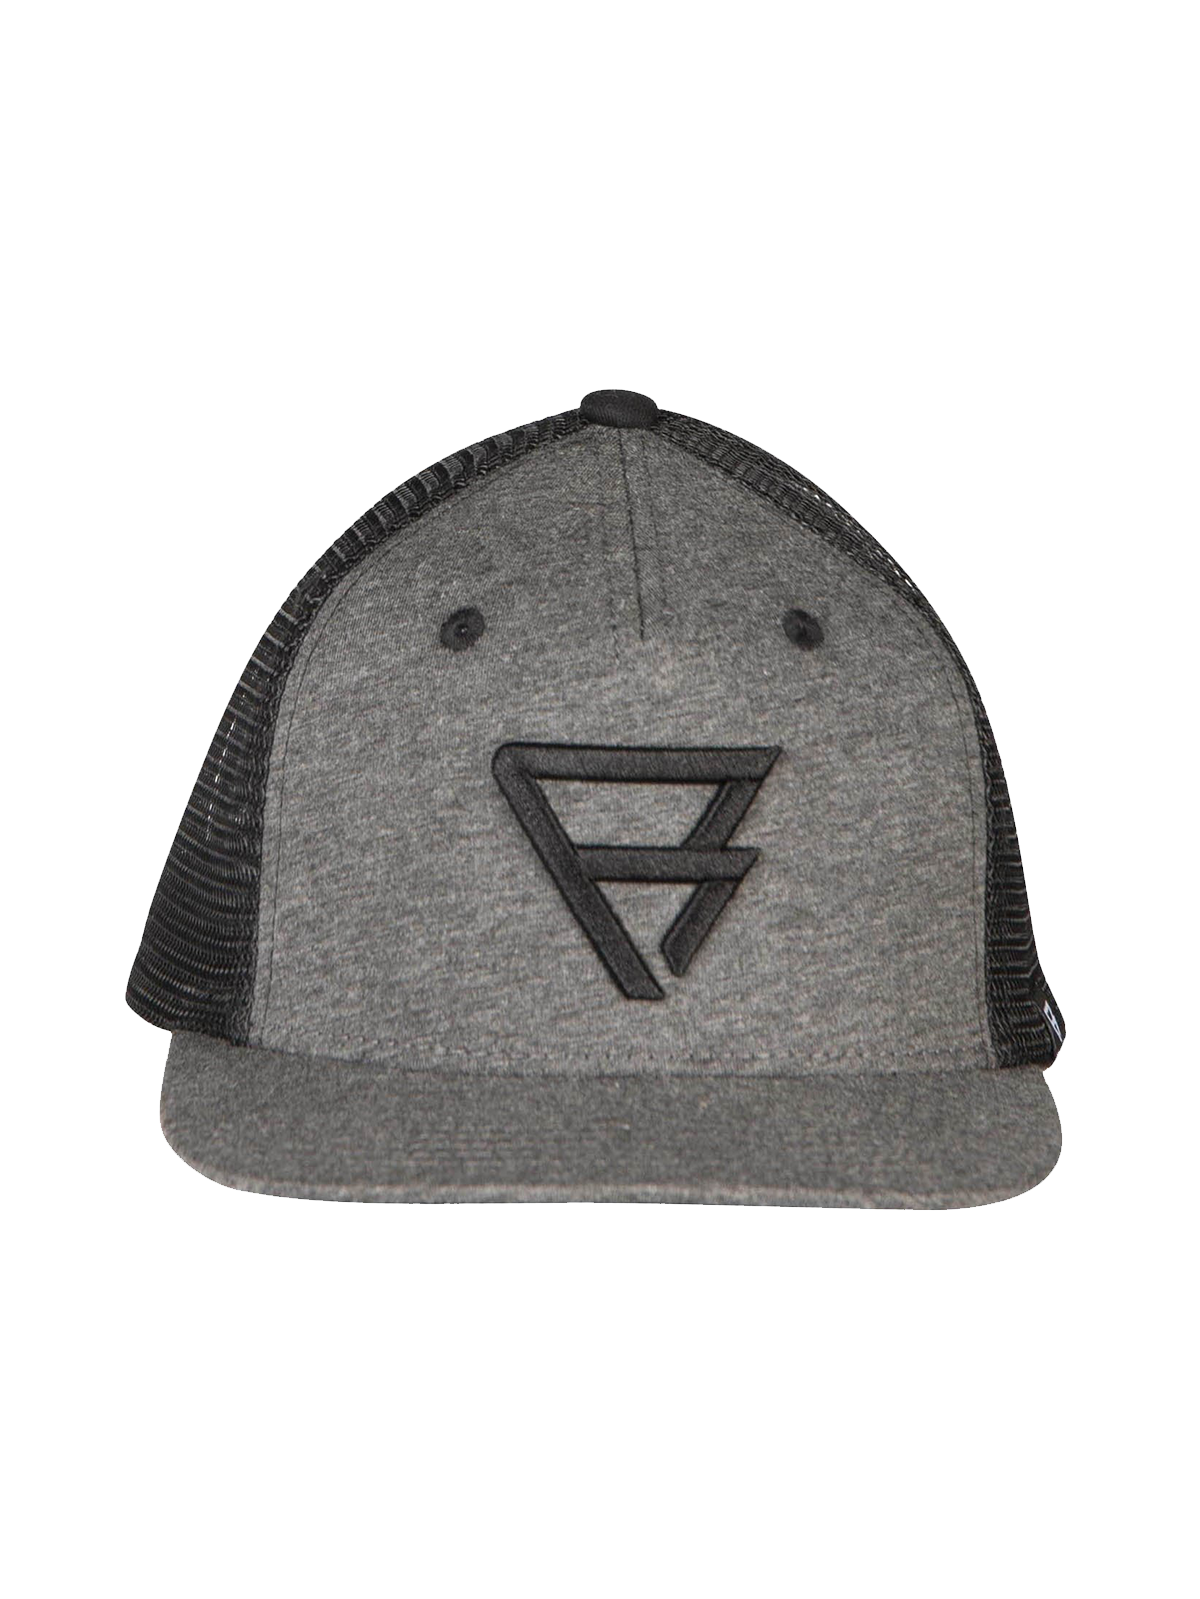 Hostiler Cap | Grey